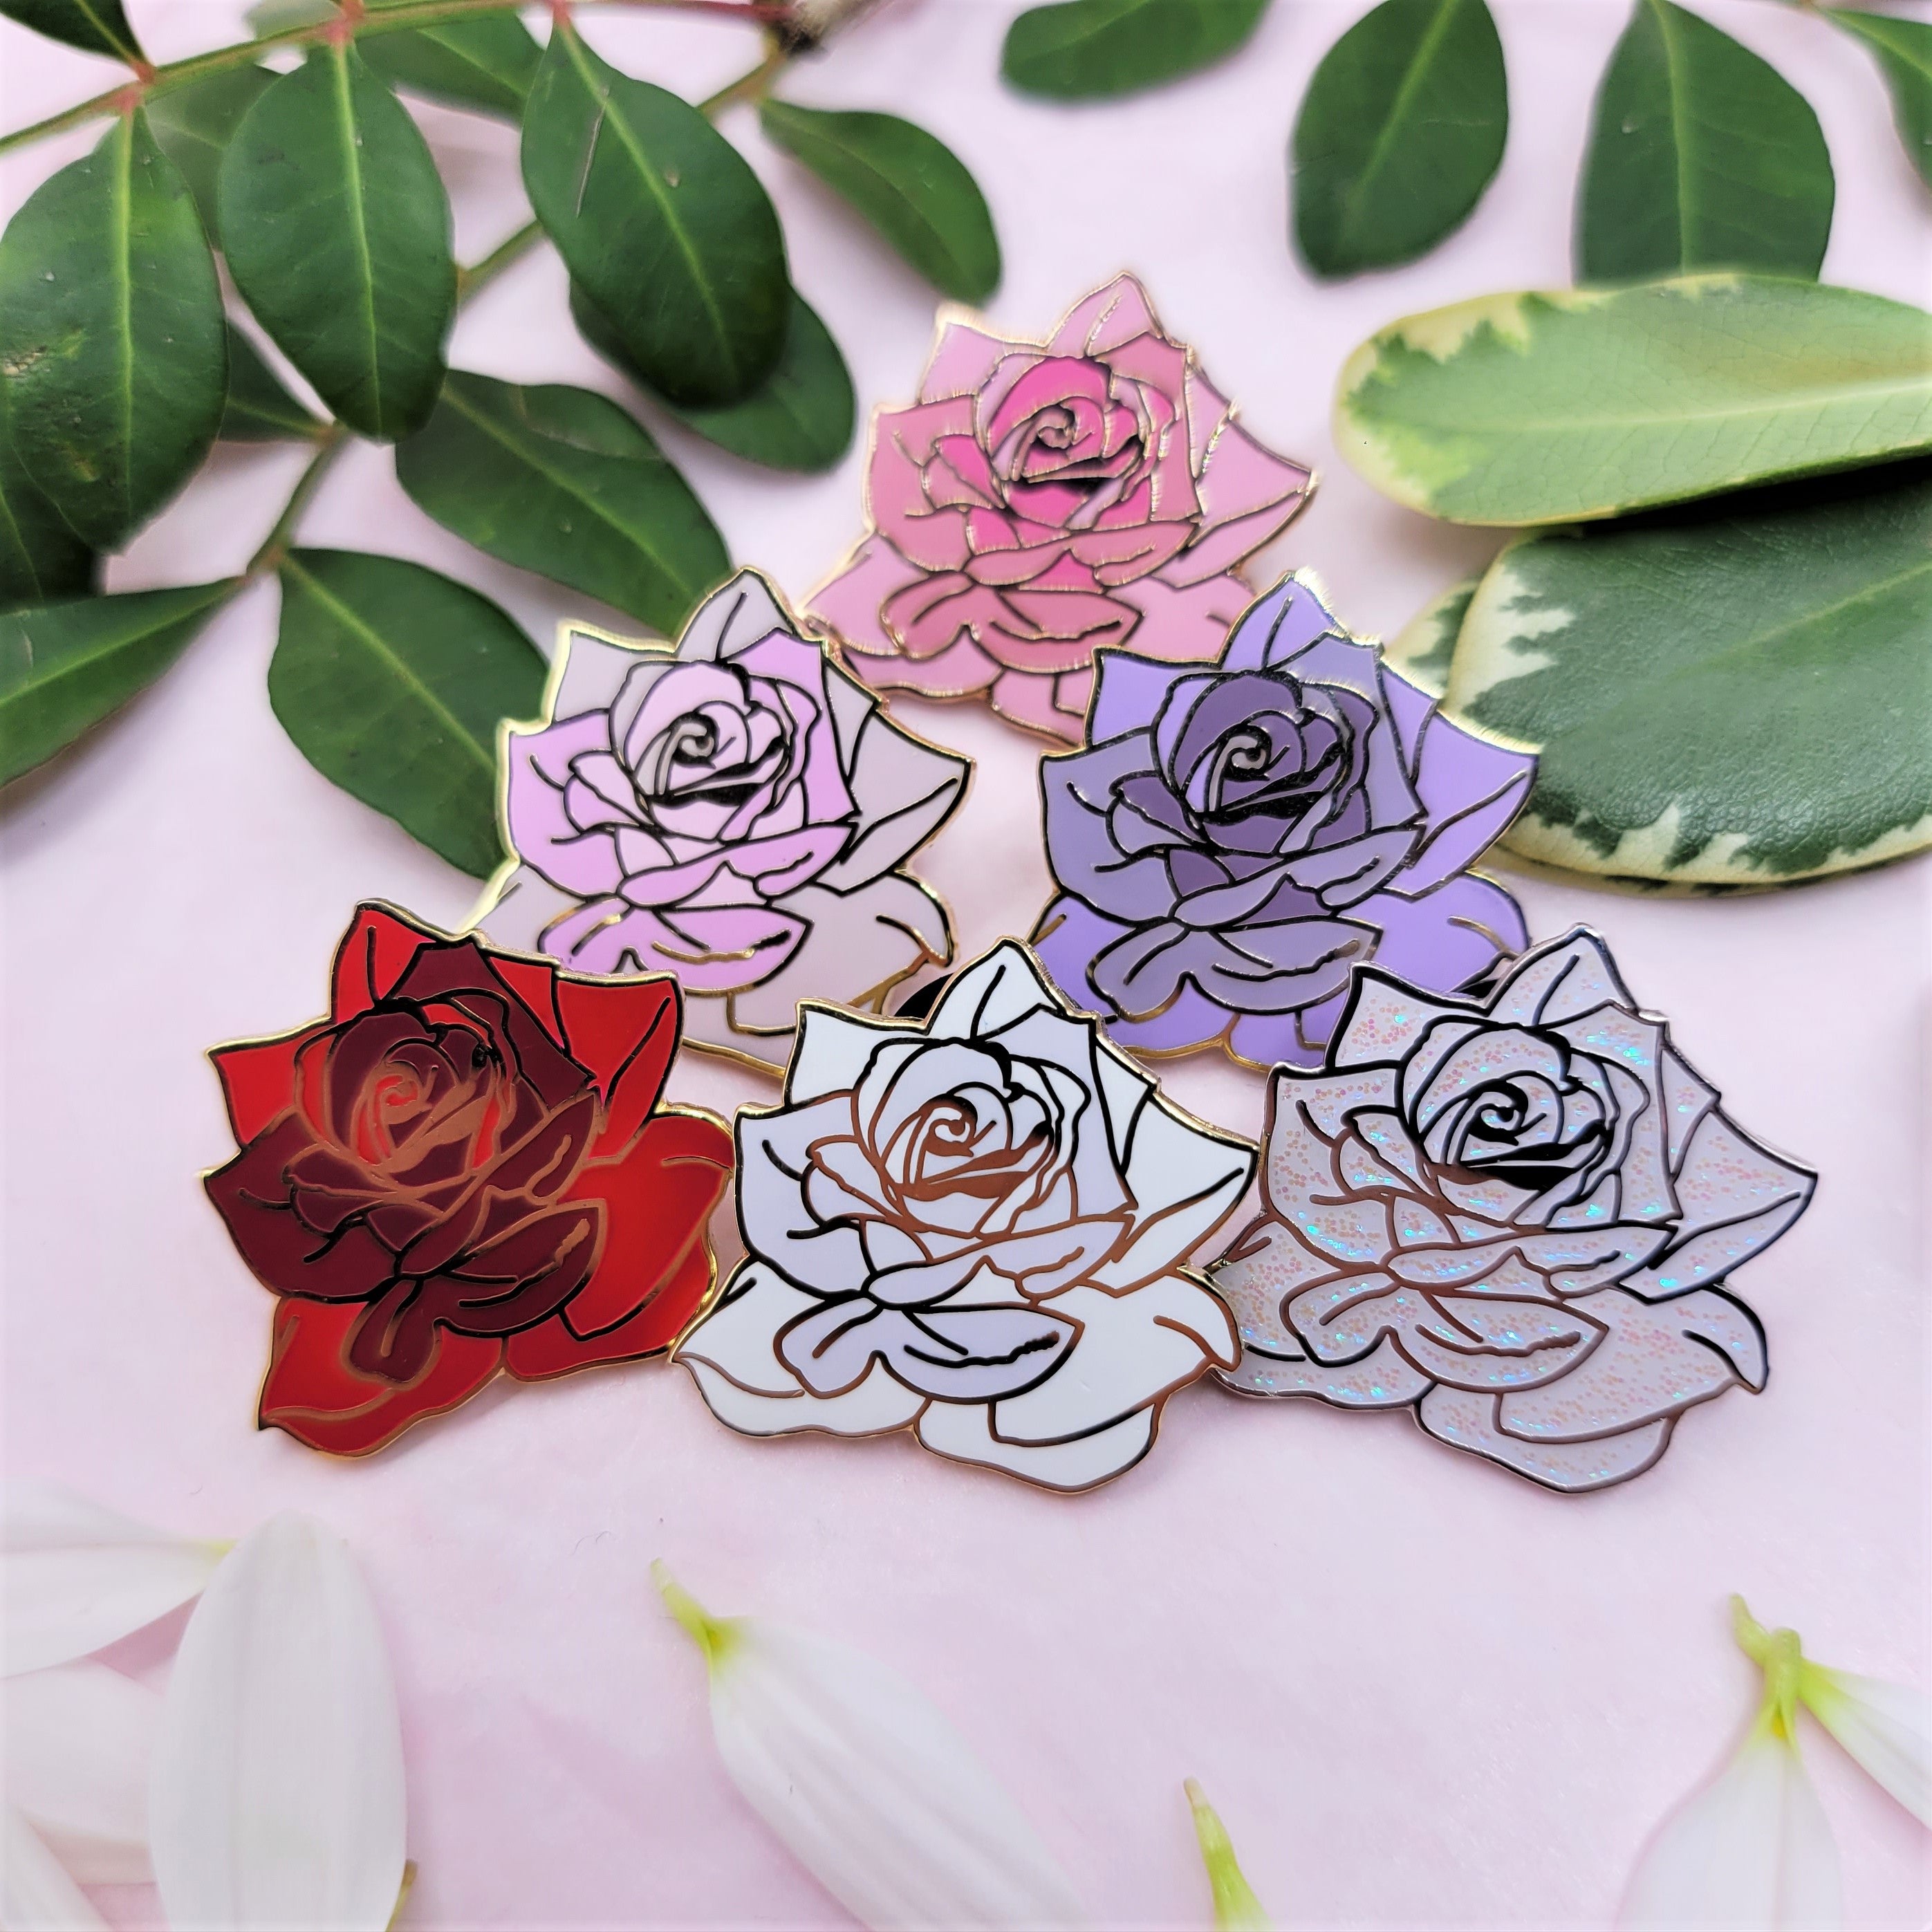 Floral Pins 2 by Petrichor Fae — Kickstarter